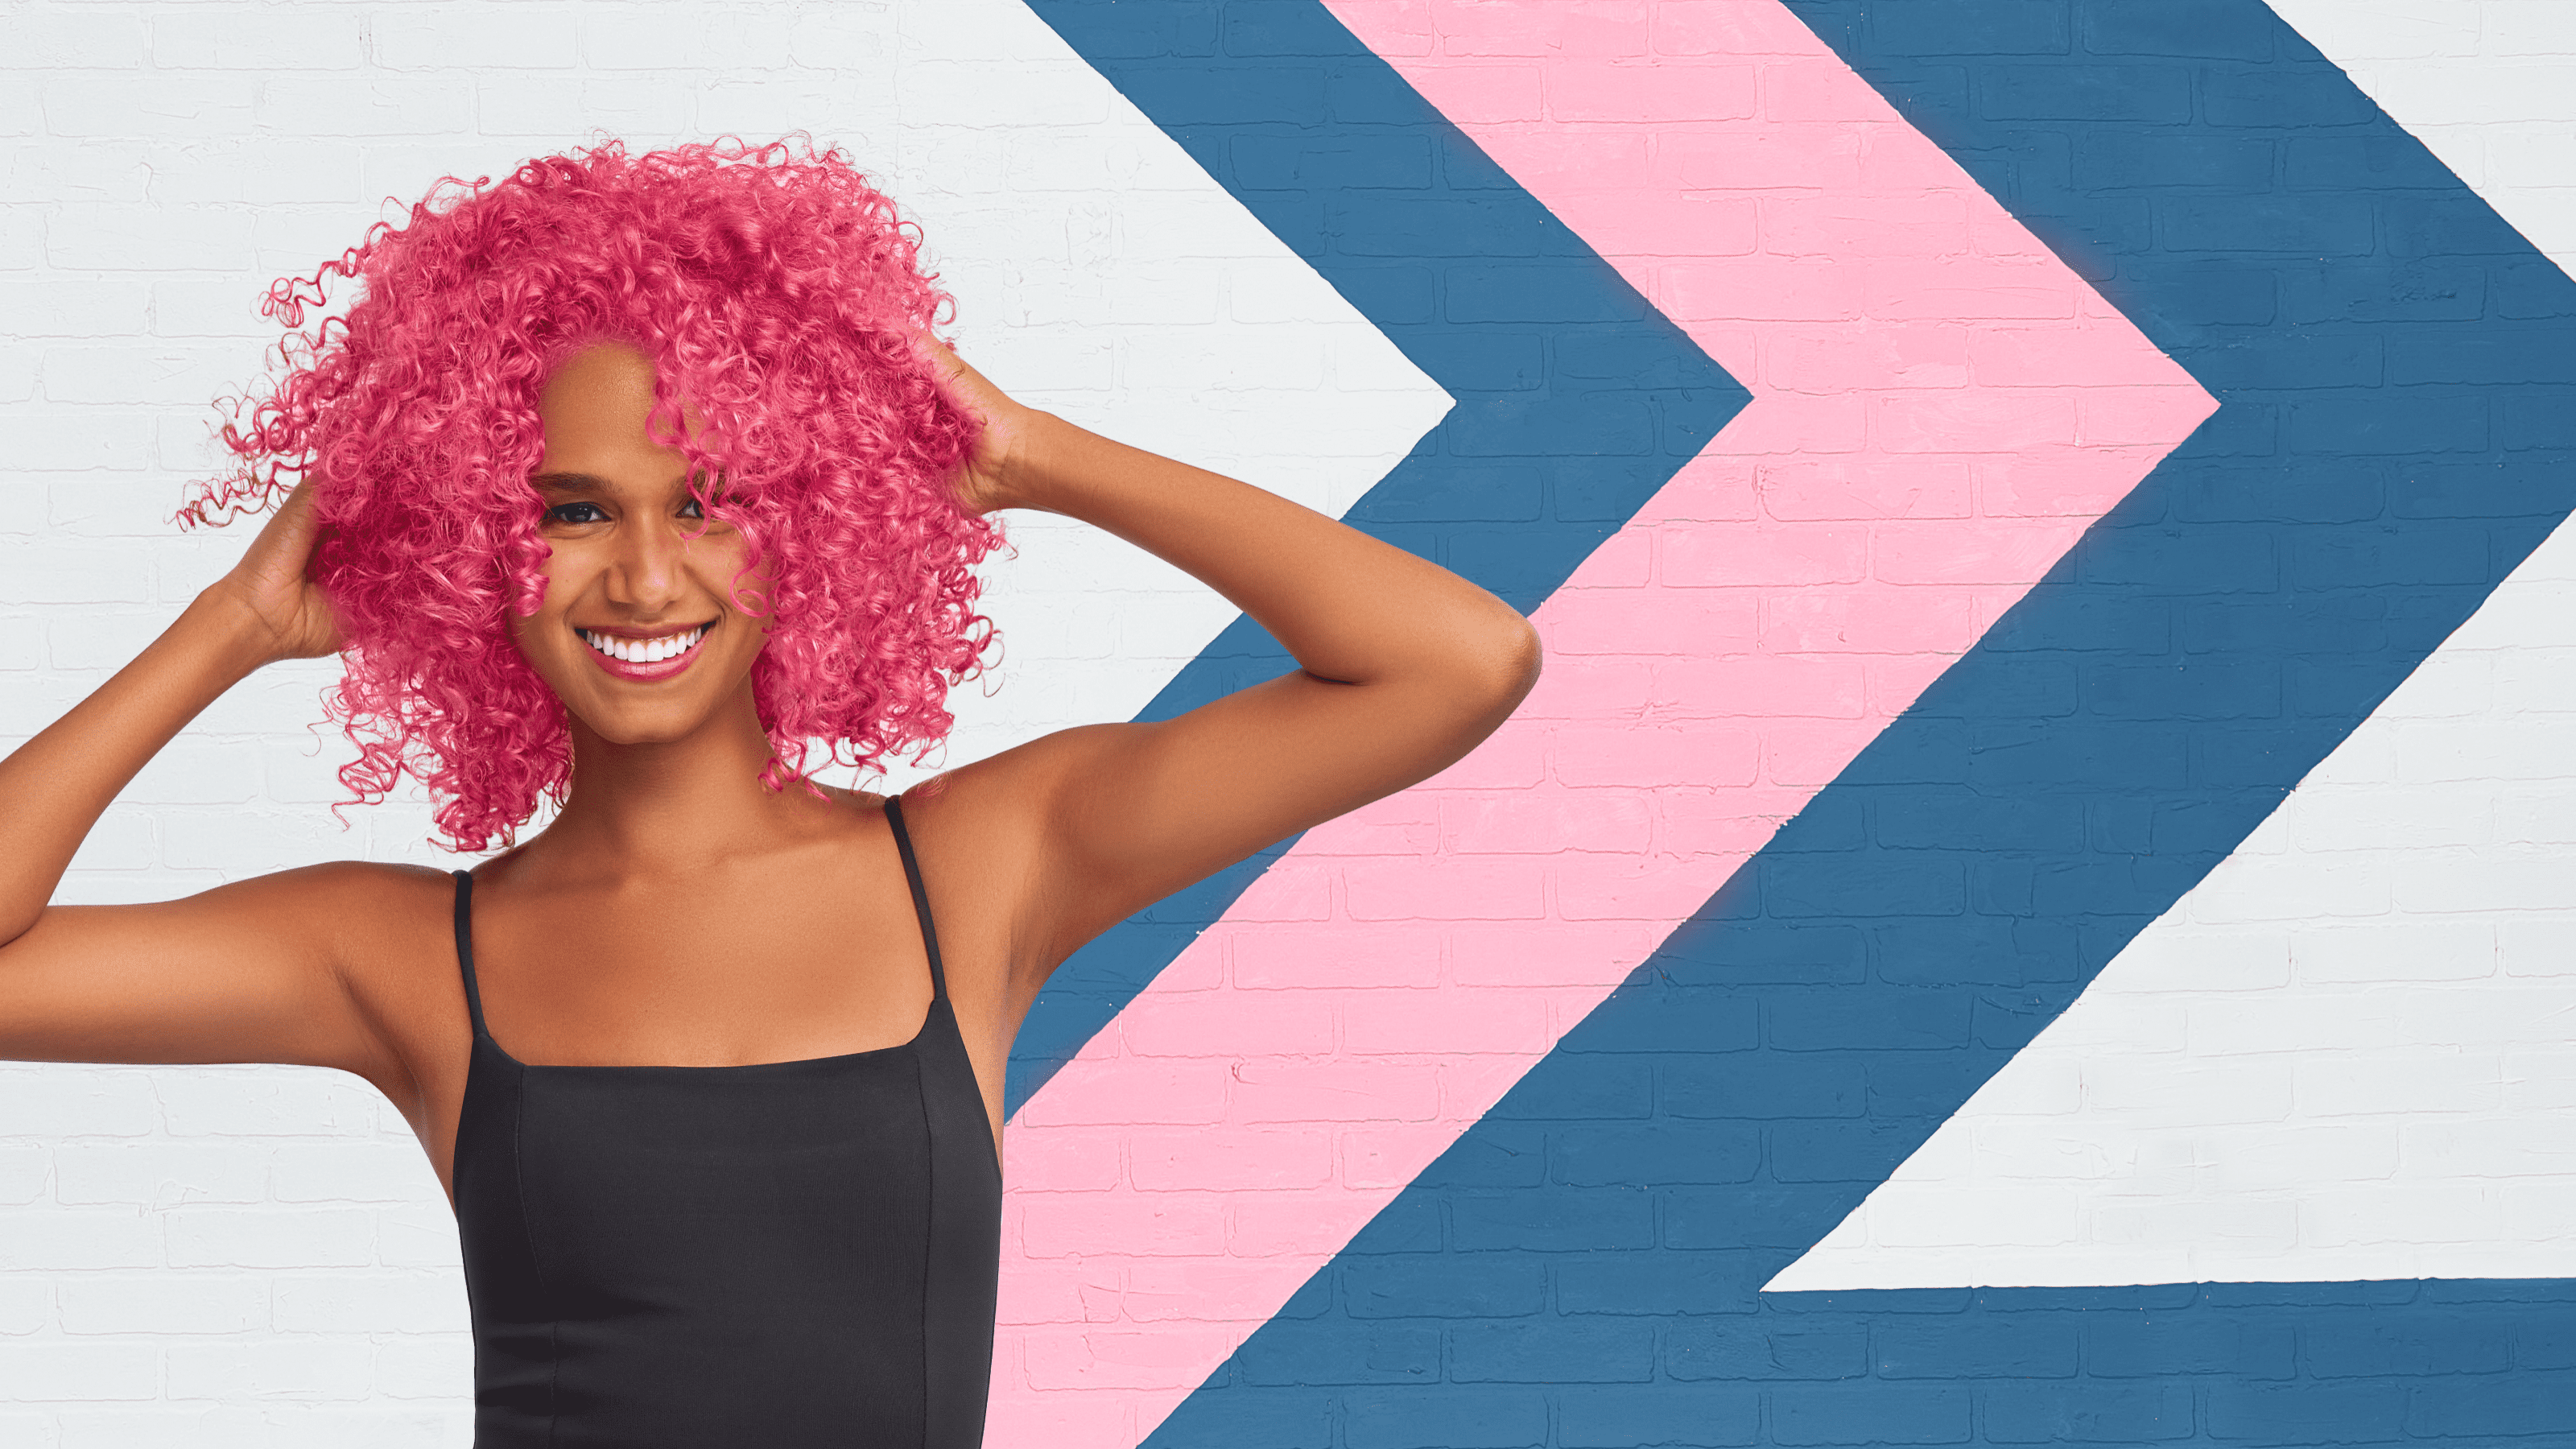 27 Pink Hair Ideas - Light Pink Hair, Rose Gold Hair, Pastel Hair